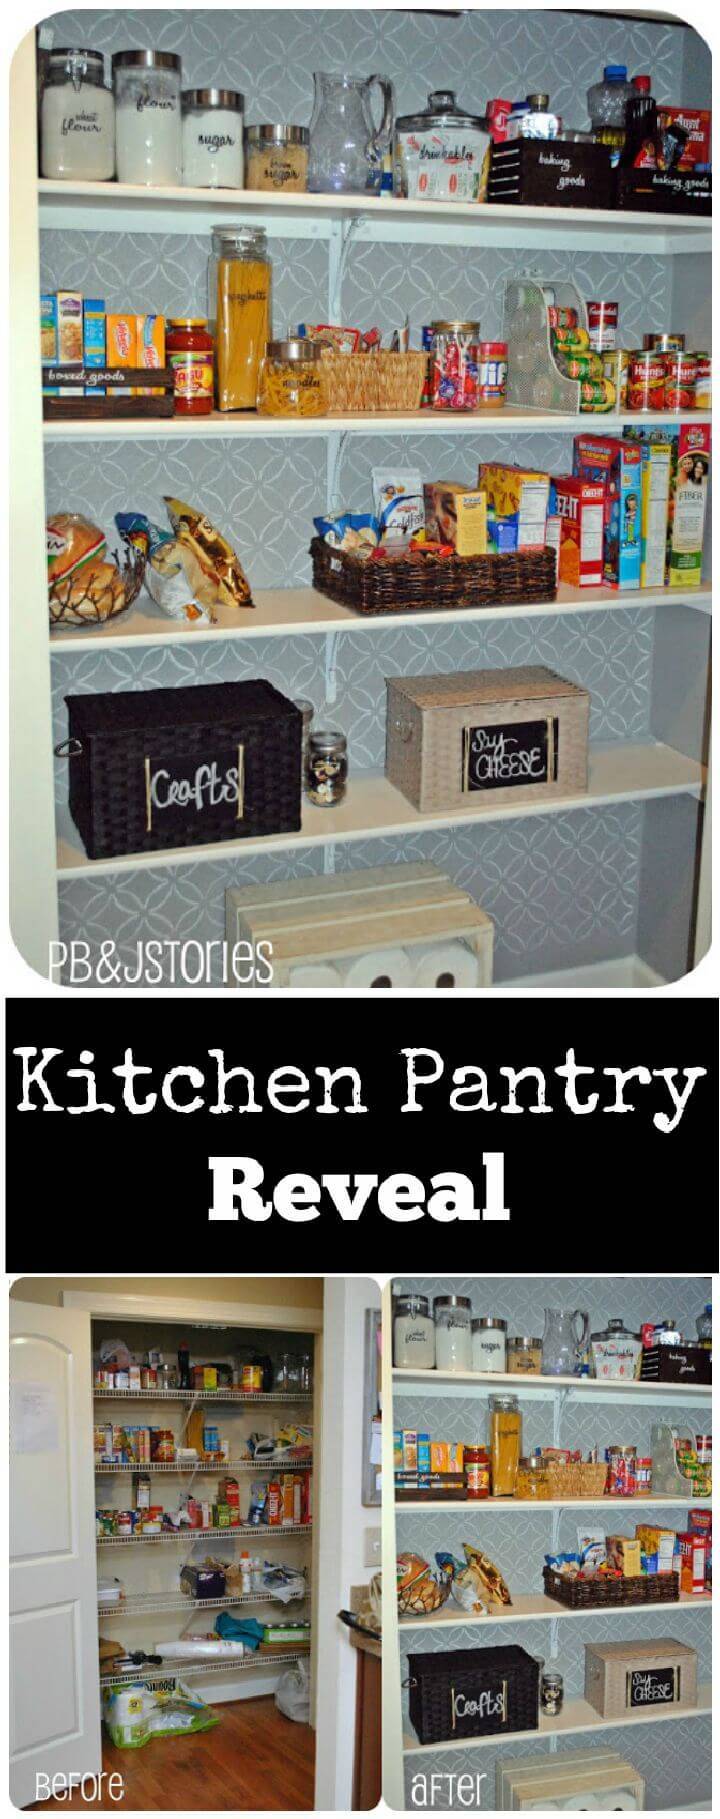 Kitchen Pantry Reveal